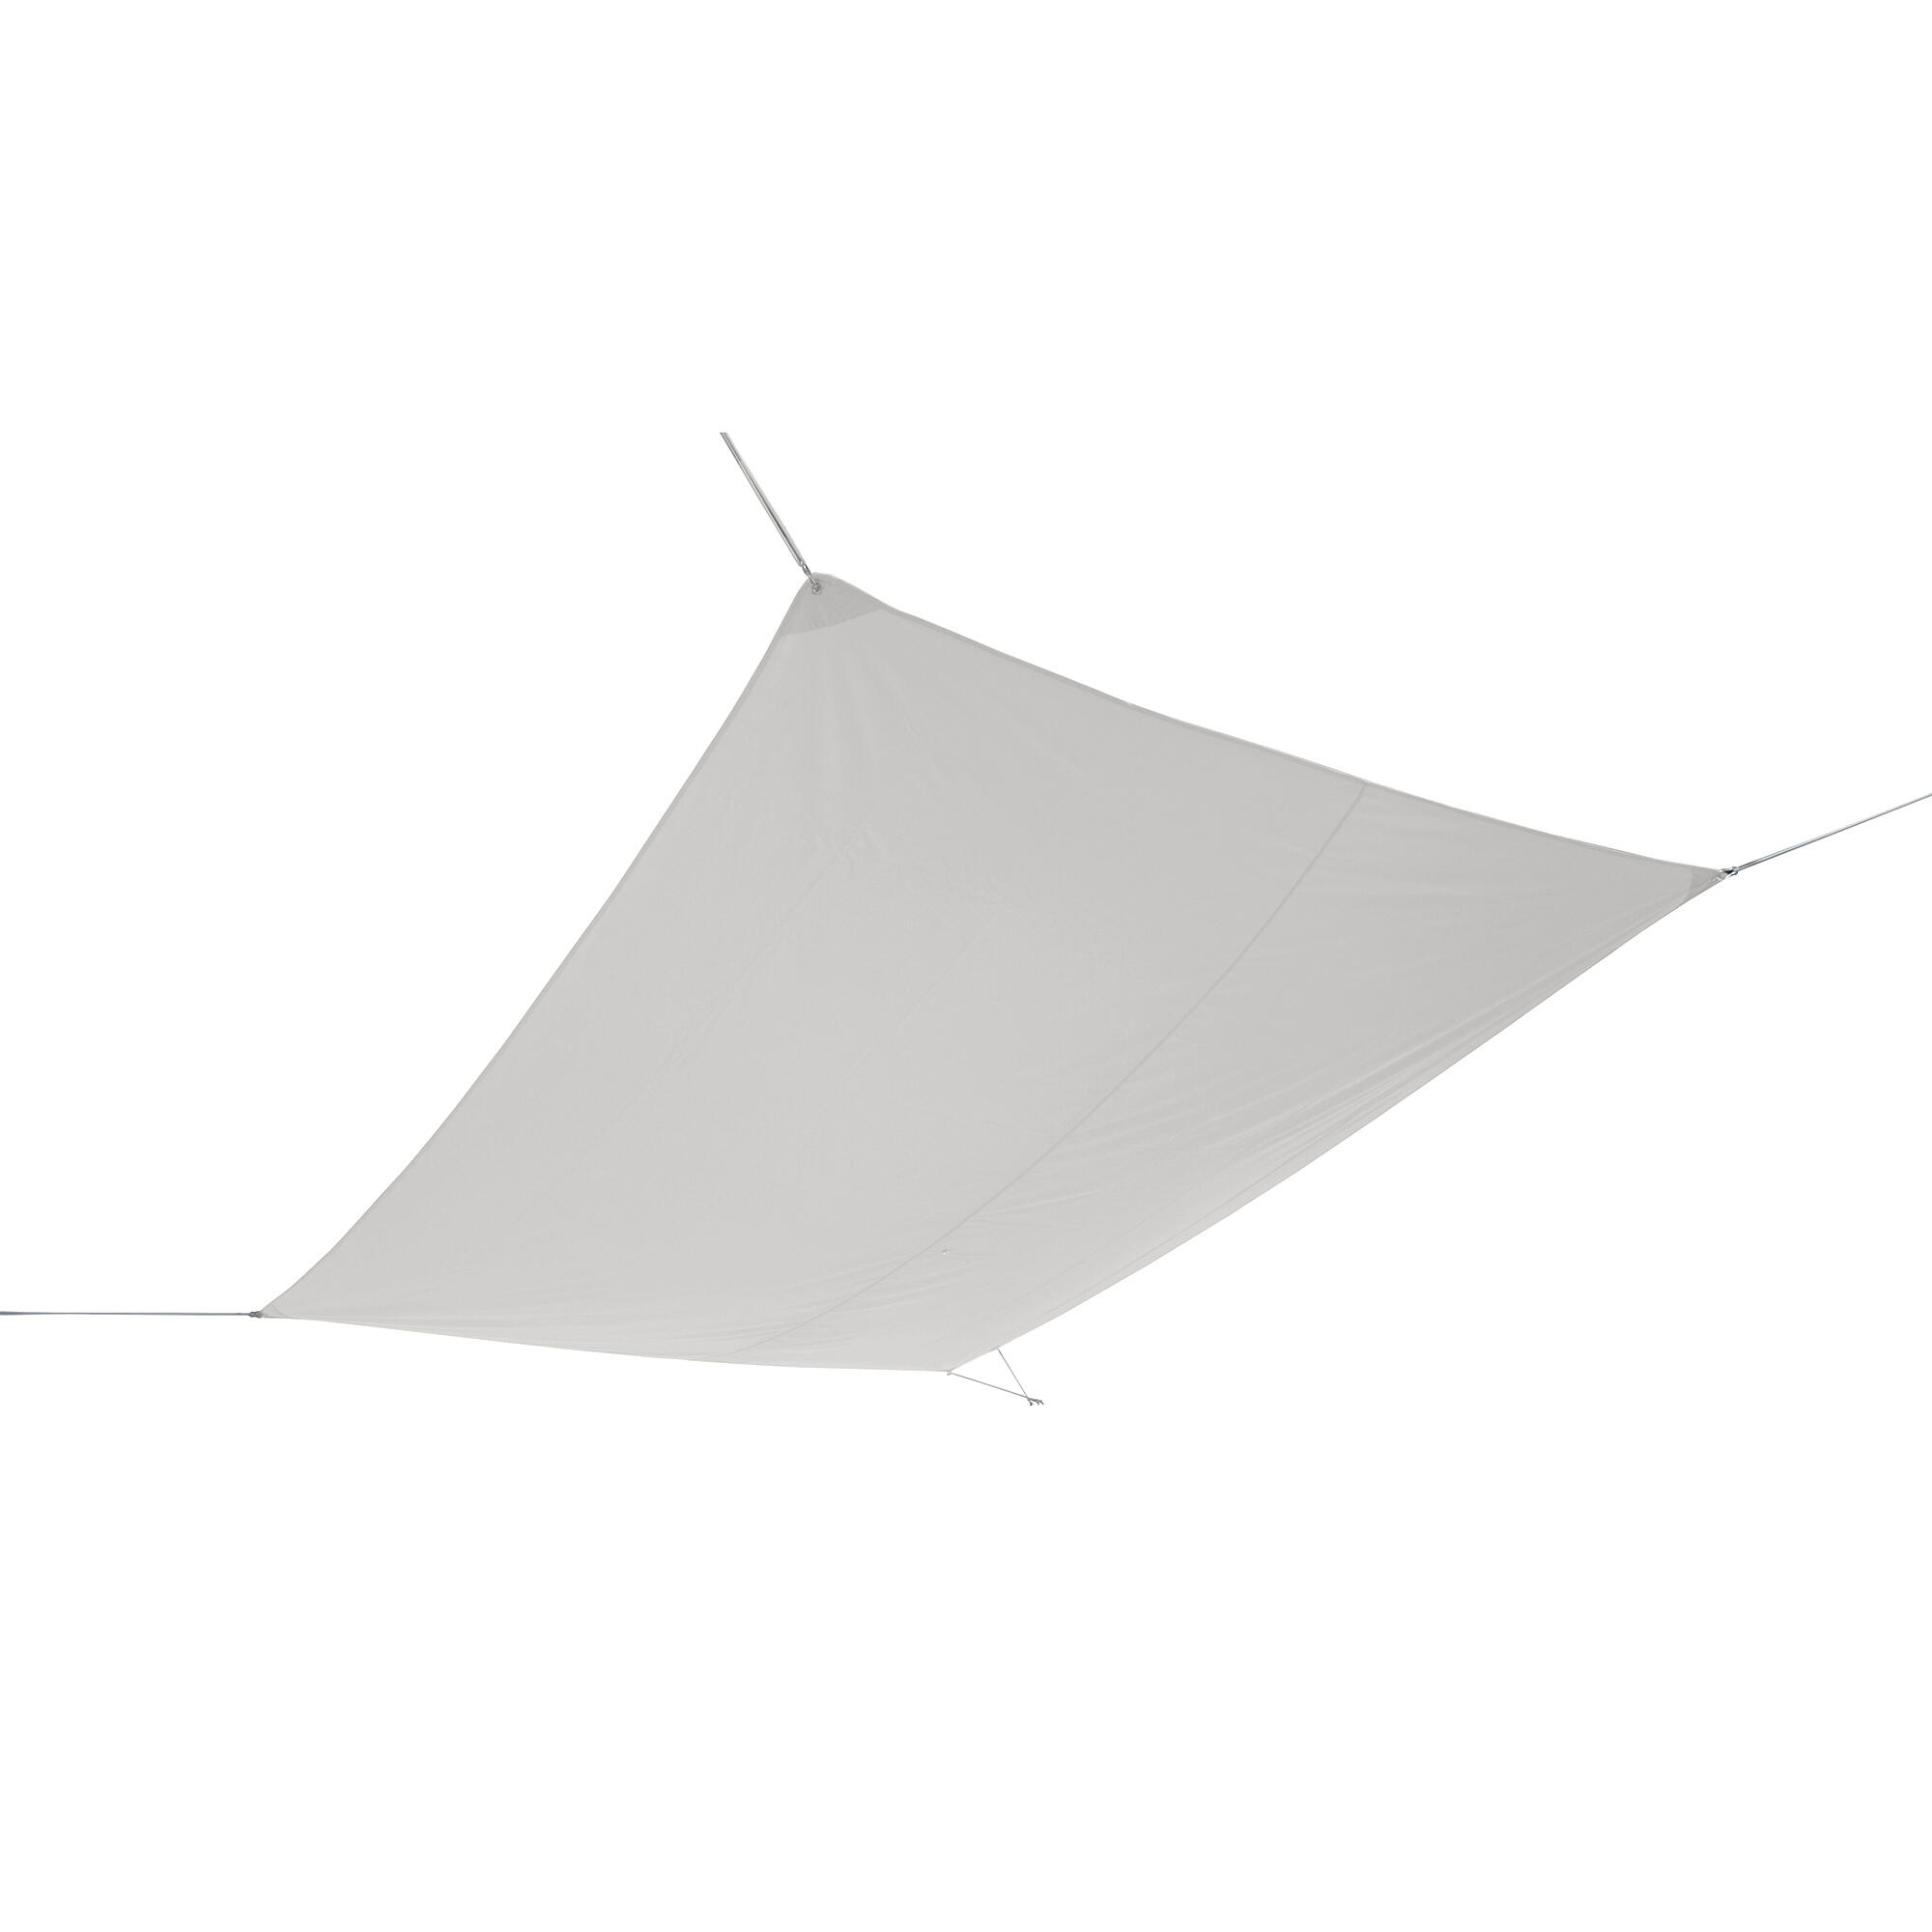 Vela ombreggiante Hegoa rettangolare bianco 300 x 400 cm - 2